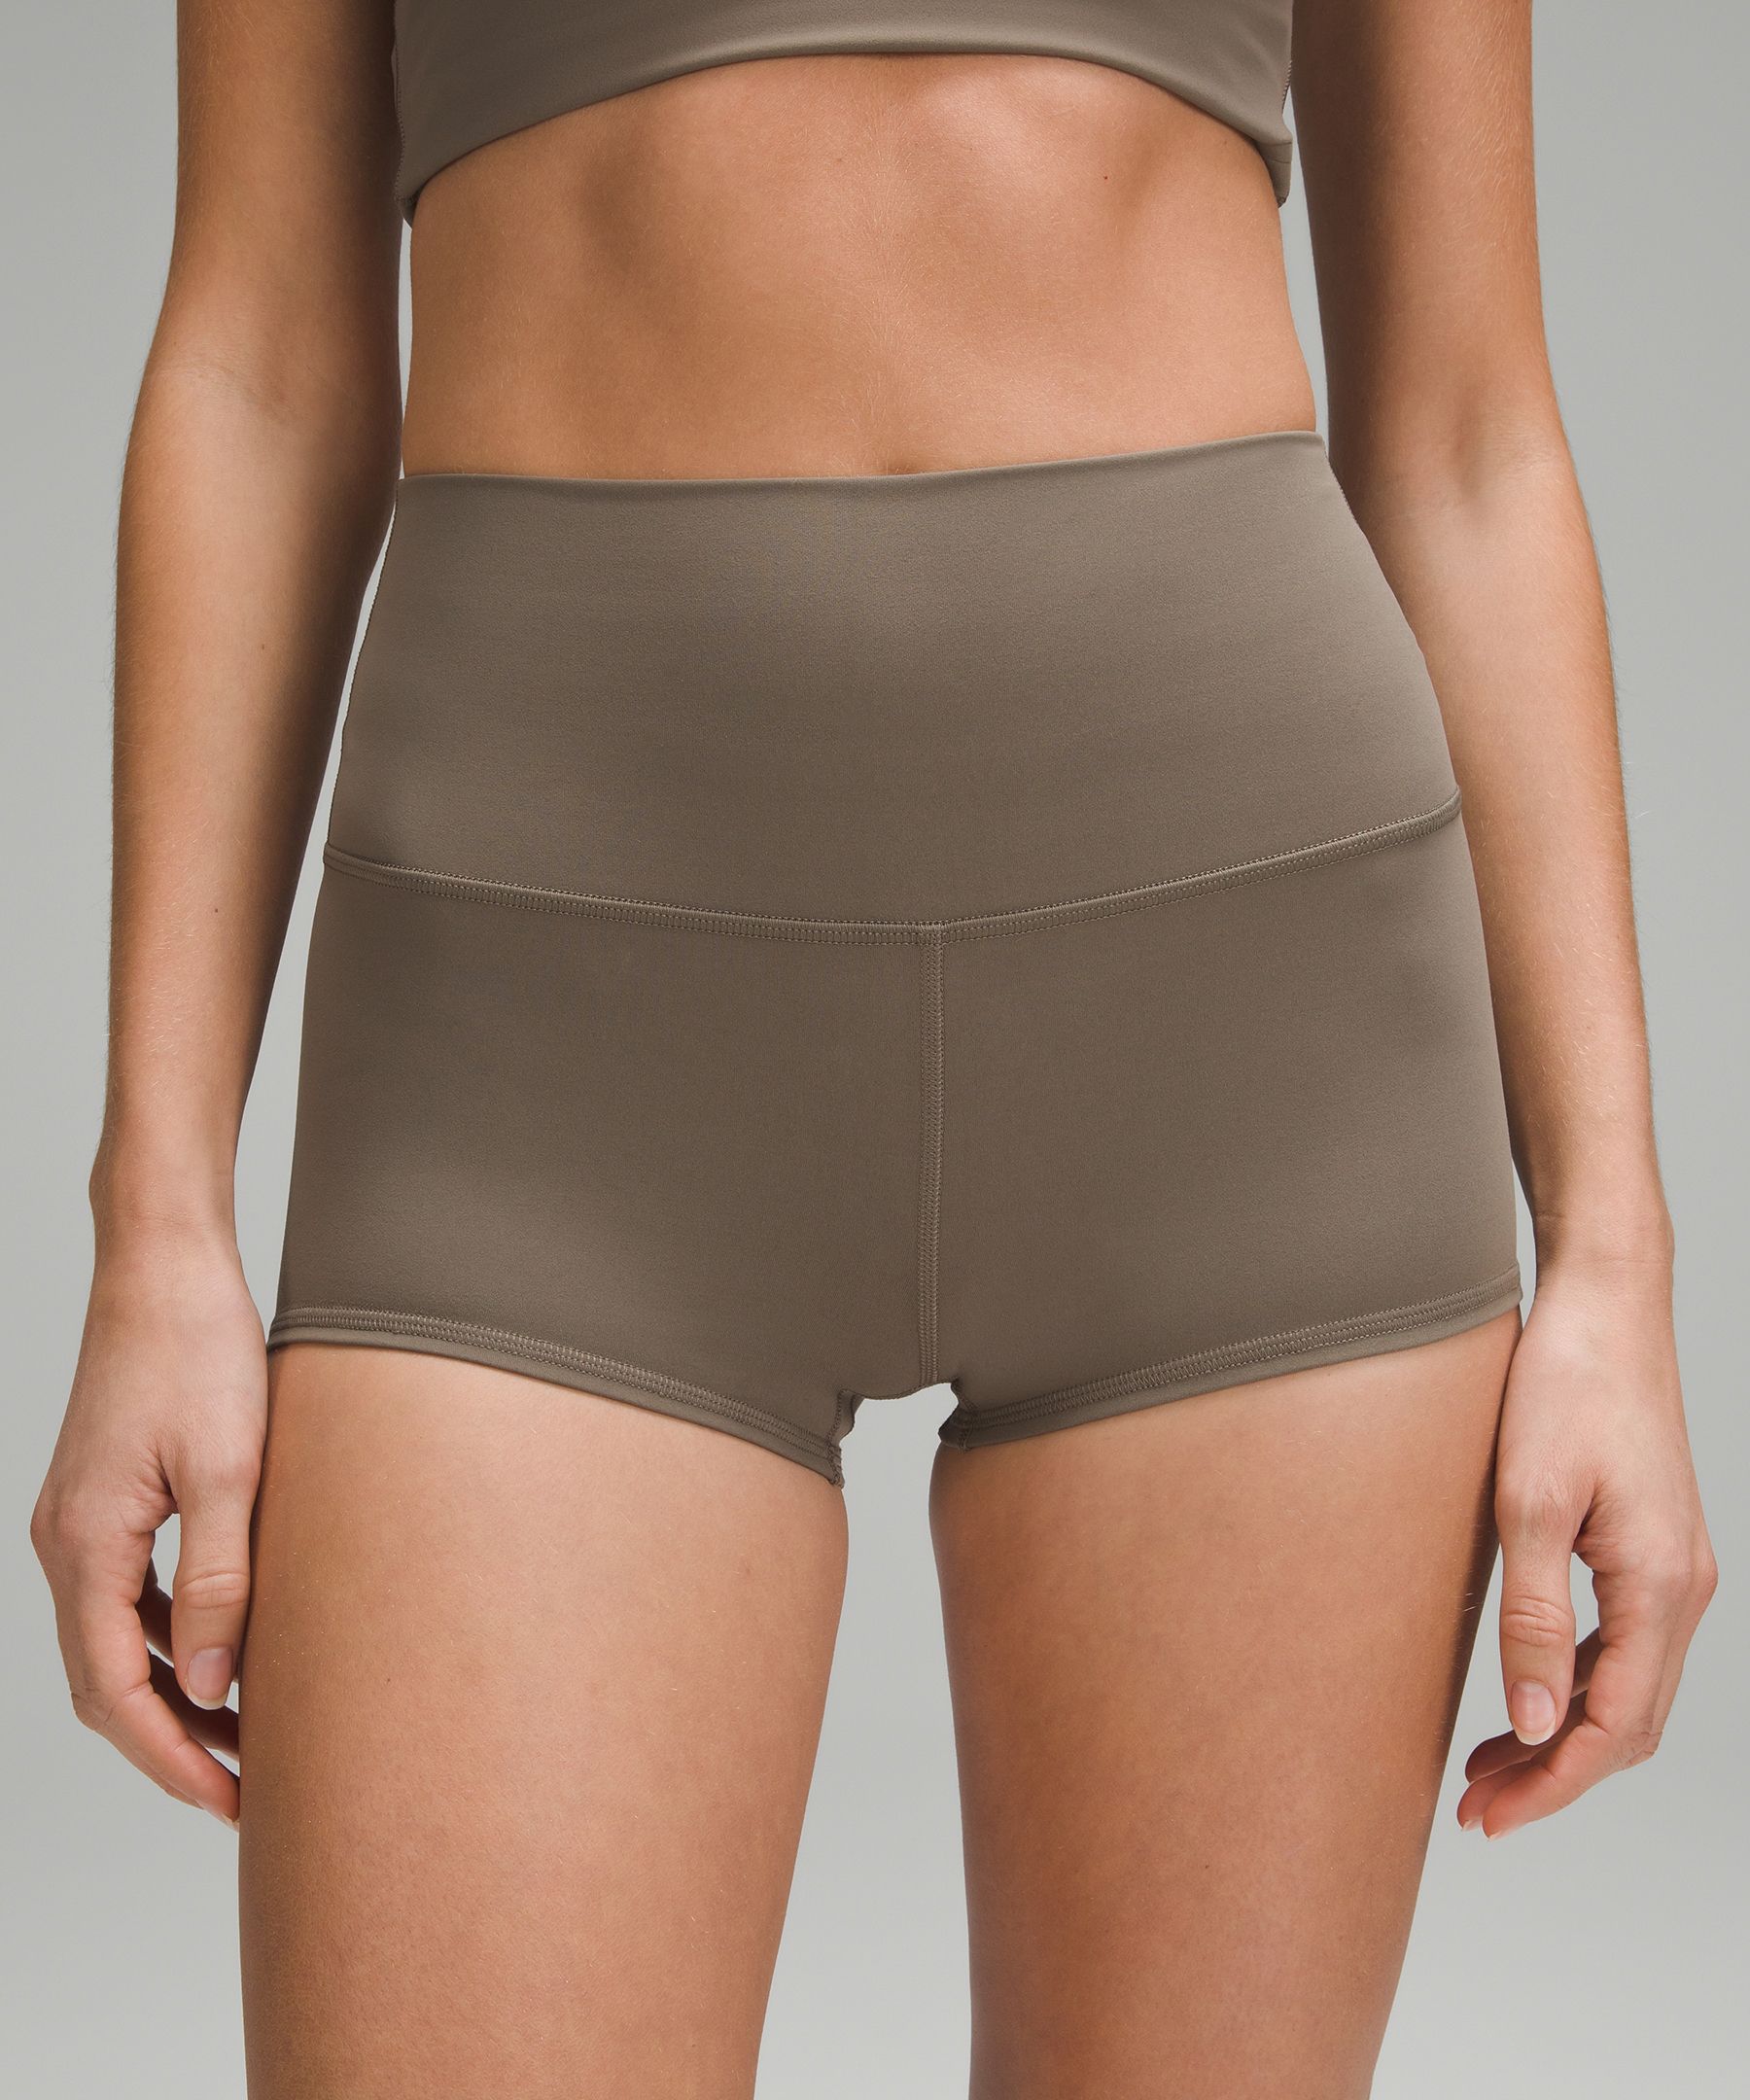 Lululemon Align Shorts 8” Black Size 2 - $38 (44% Off Retail) - From Kaylen